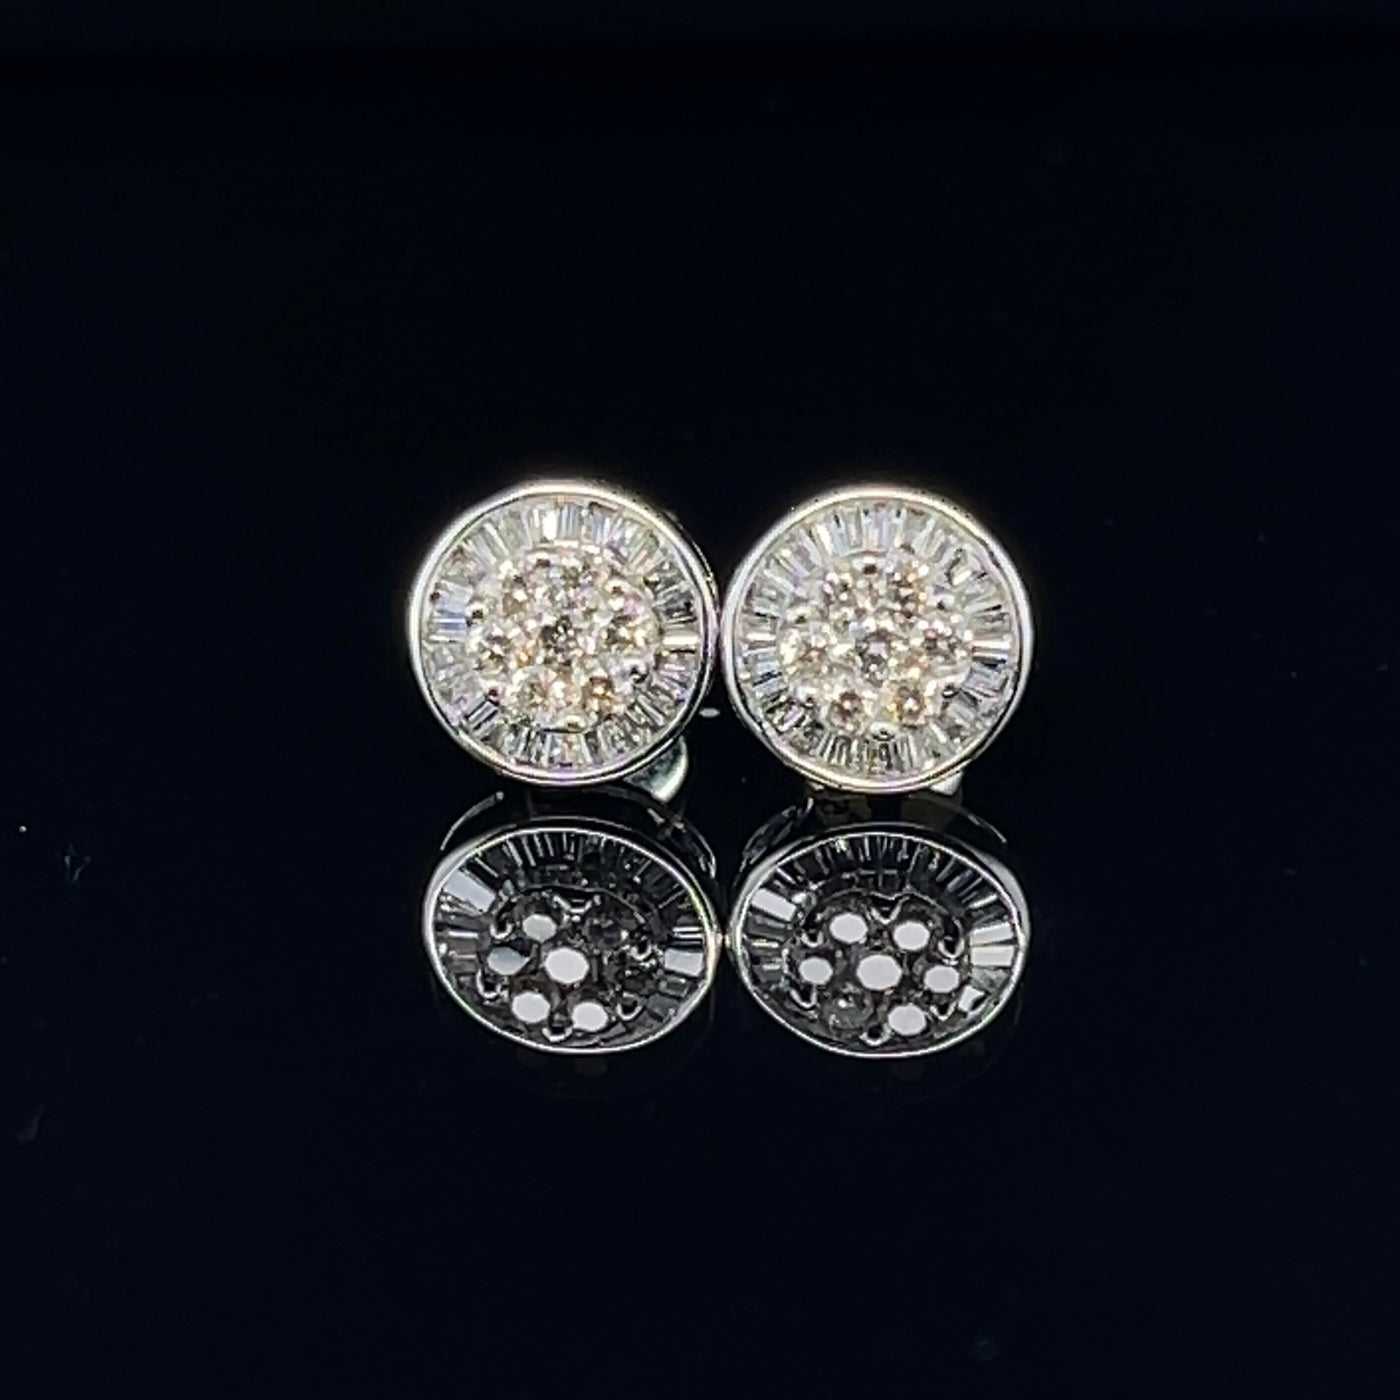 18CT White Gold Diamond Stud Earrings